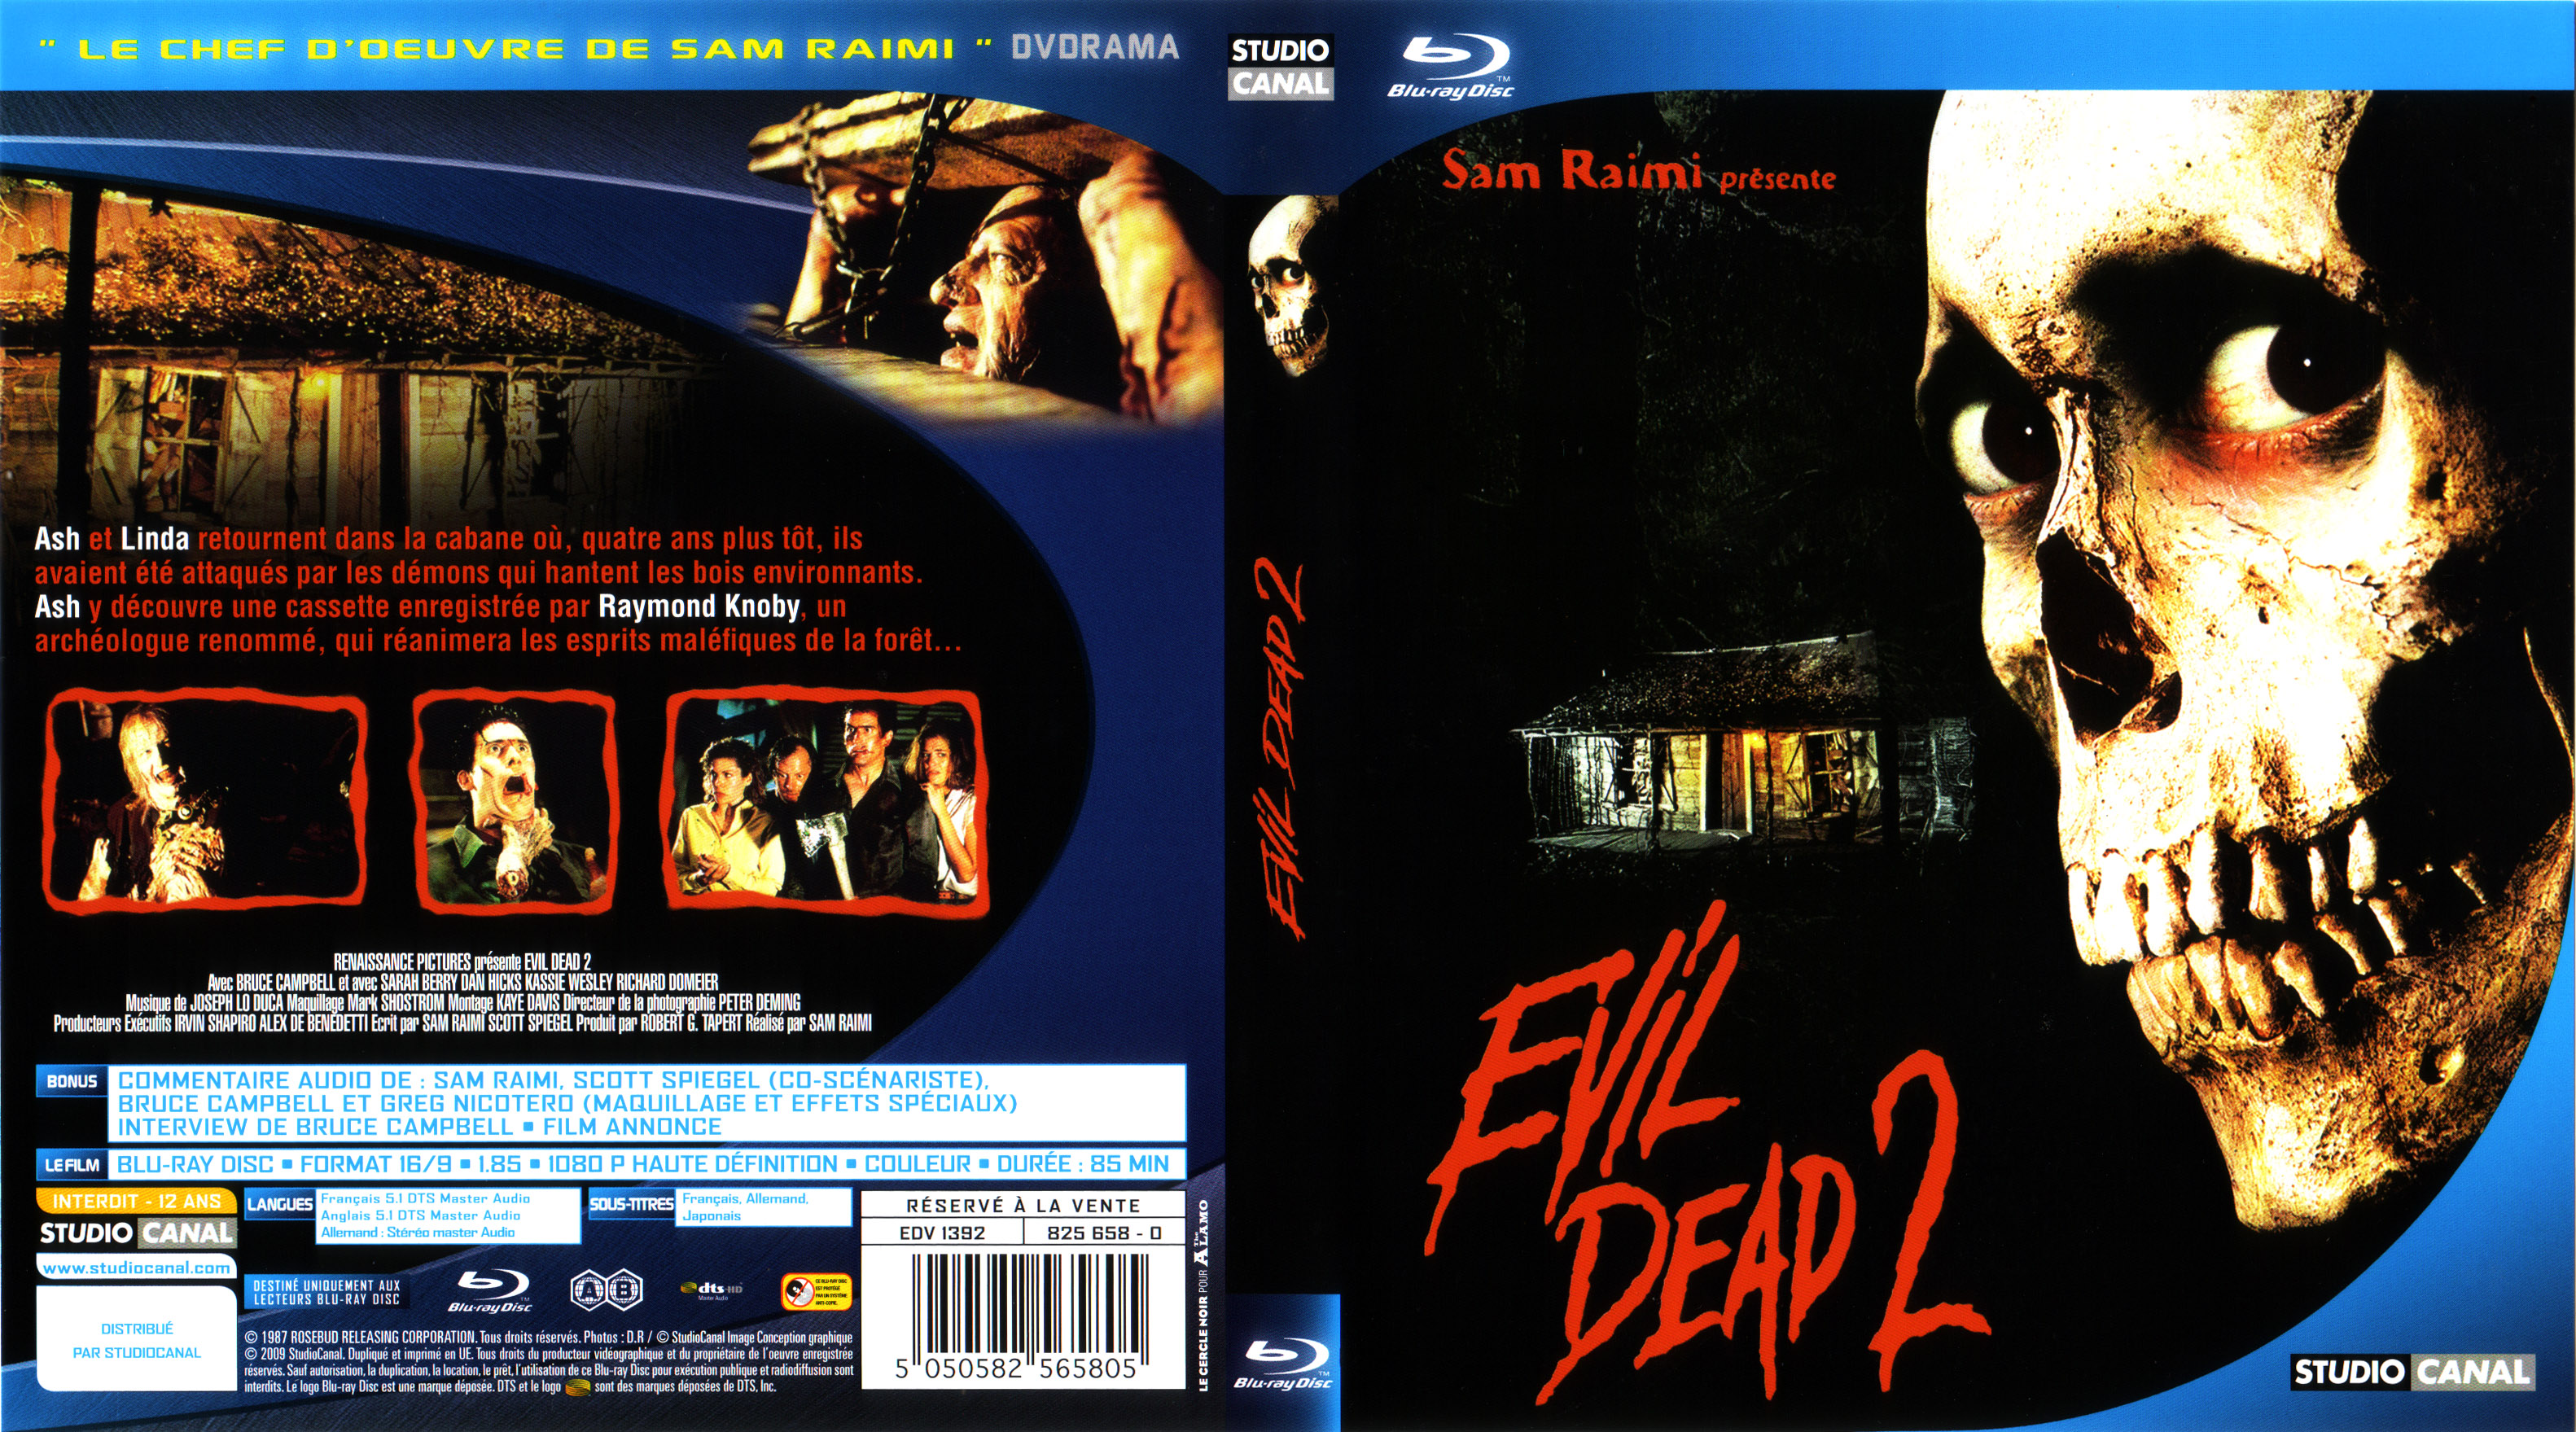 Jaquette DVD Evil dead 2 (BLU-RAY)